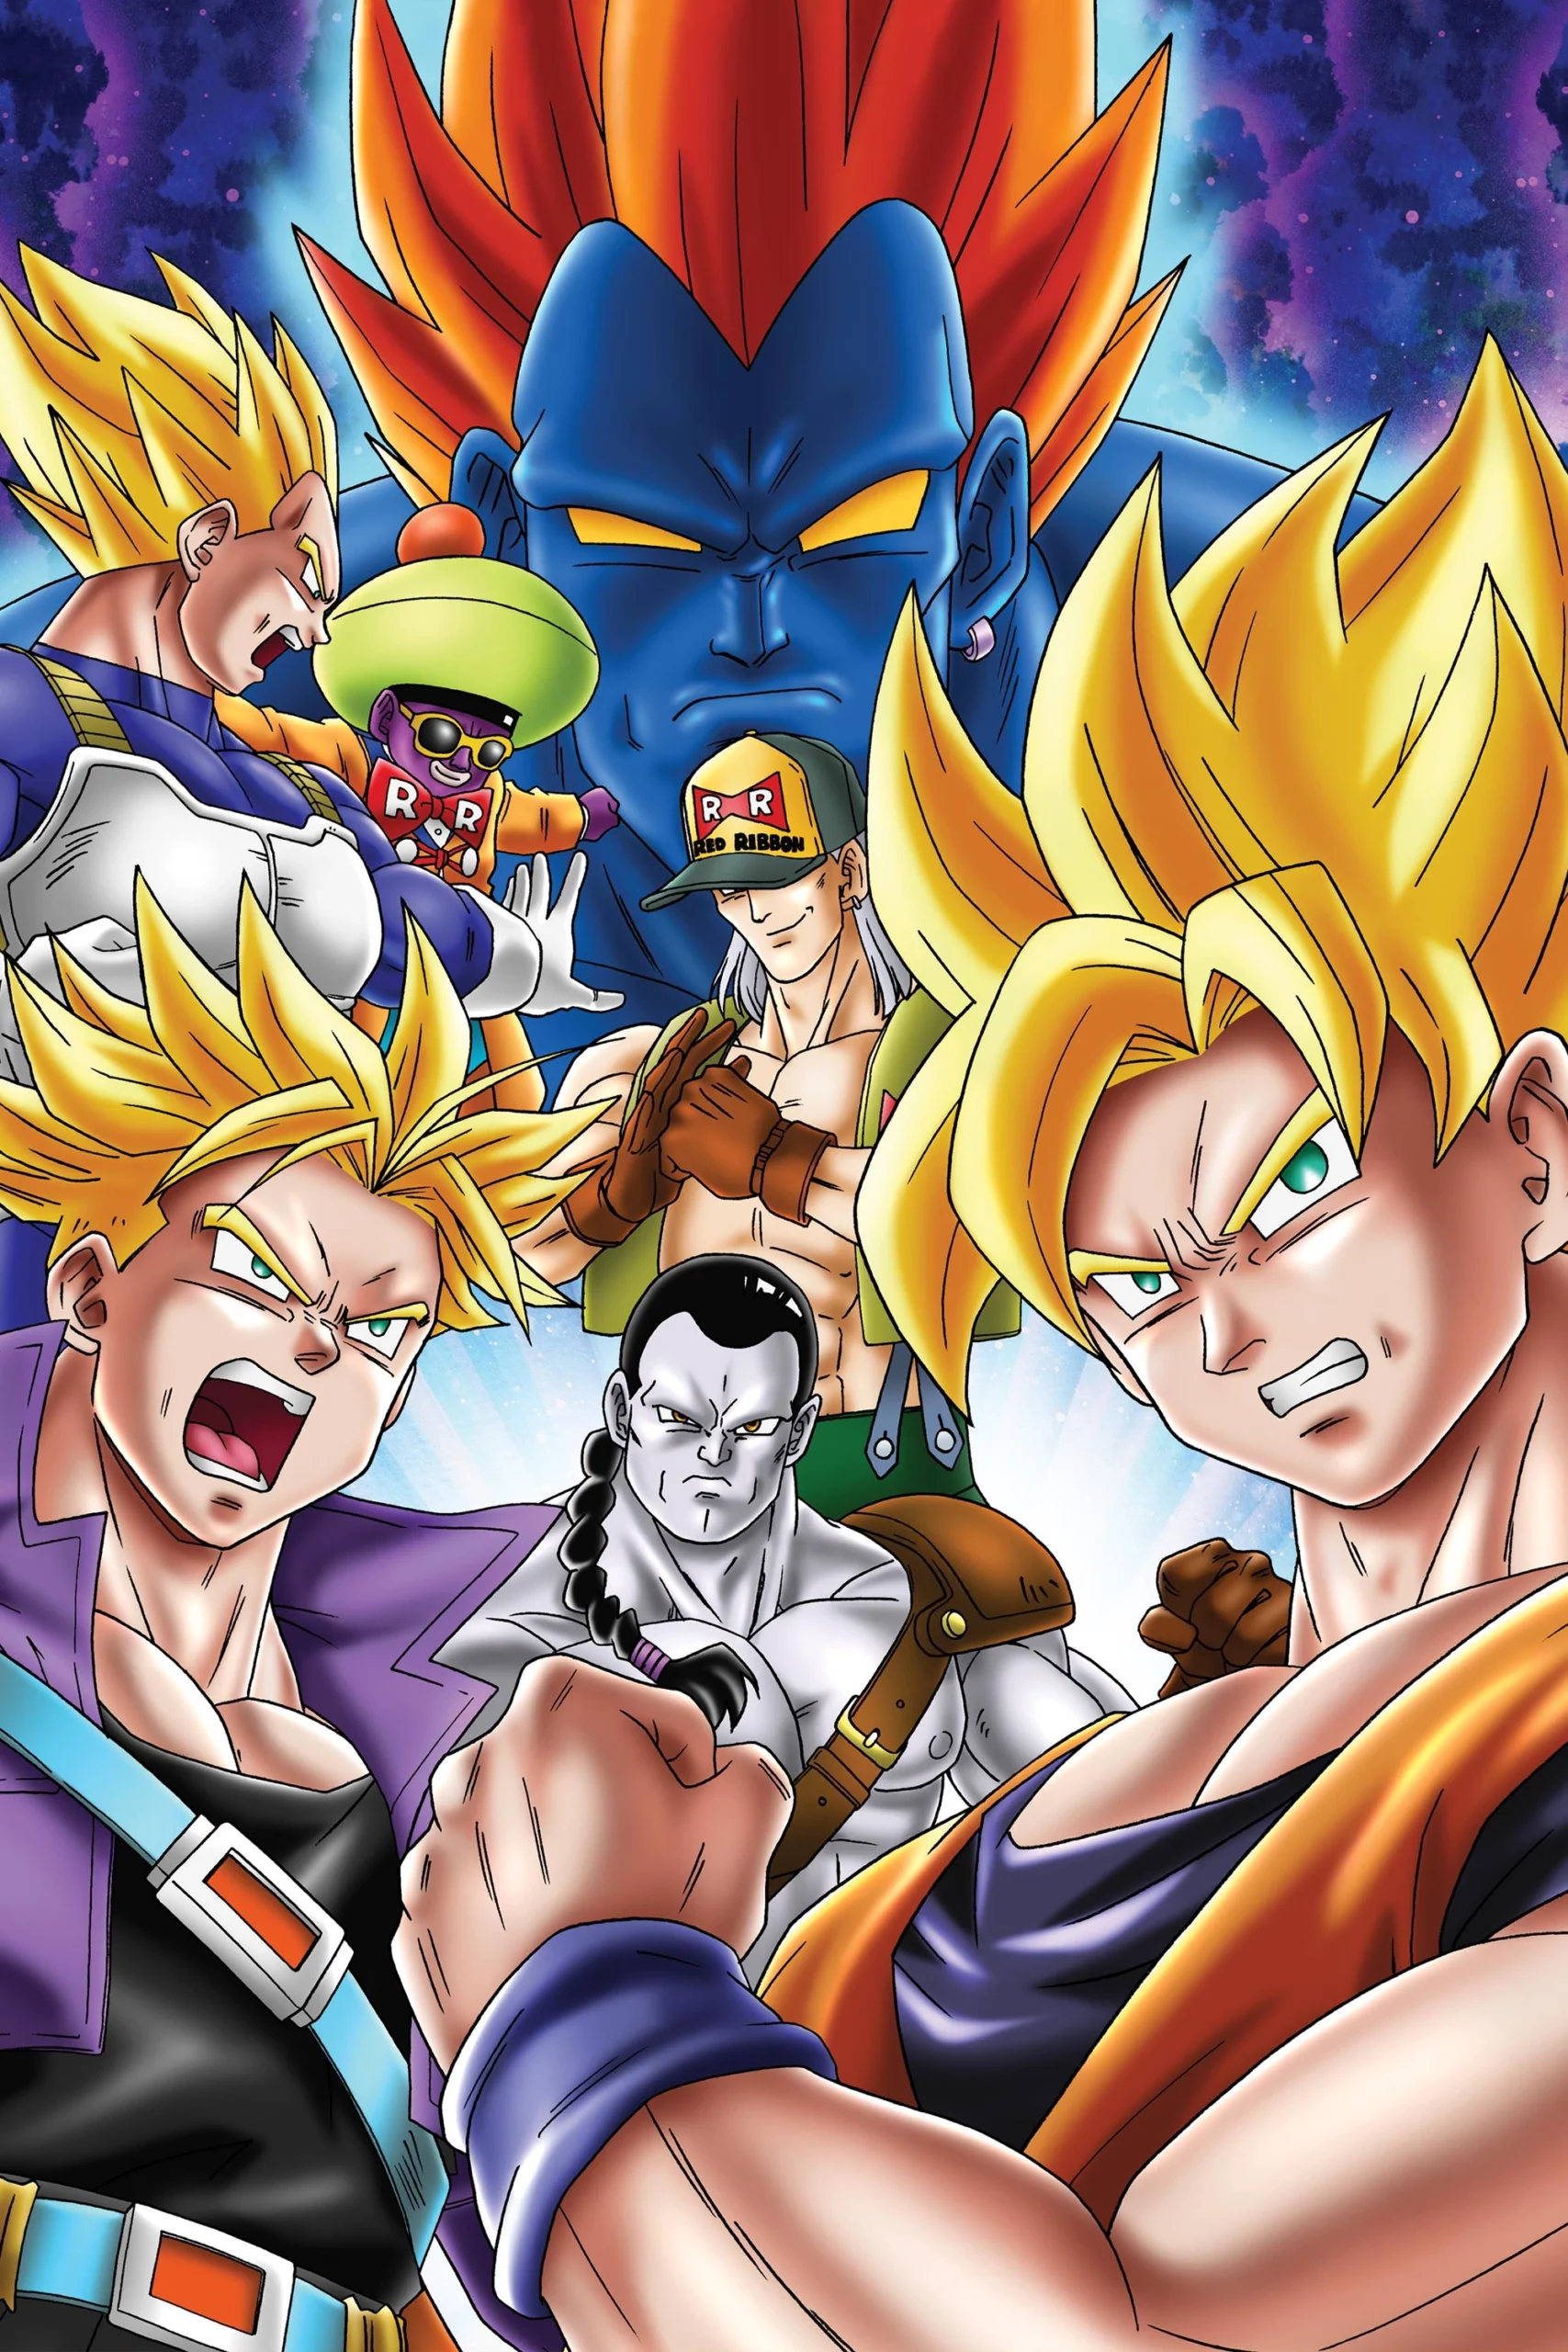 Crunchyroll anuncia lançamento de 13 filmes de Dragon Ball Z dublados e 1  de Cavaleiros do Zodíaco - IntoxiAnime